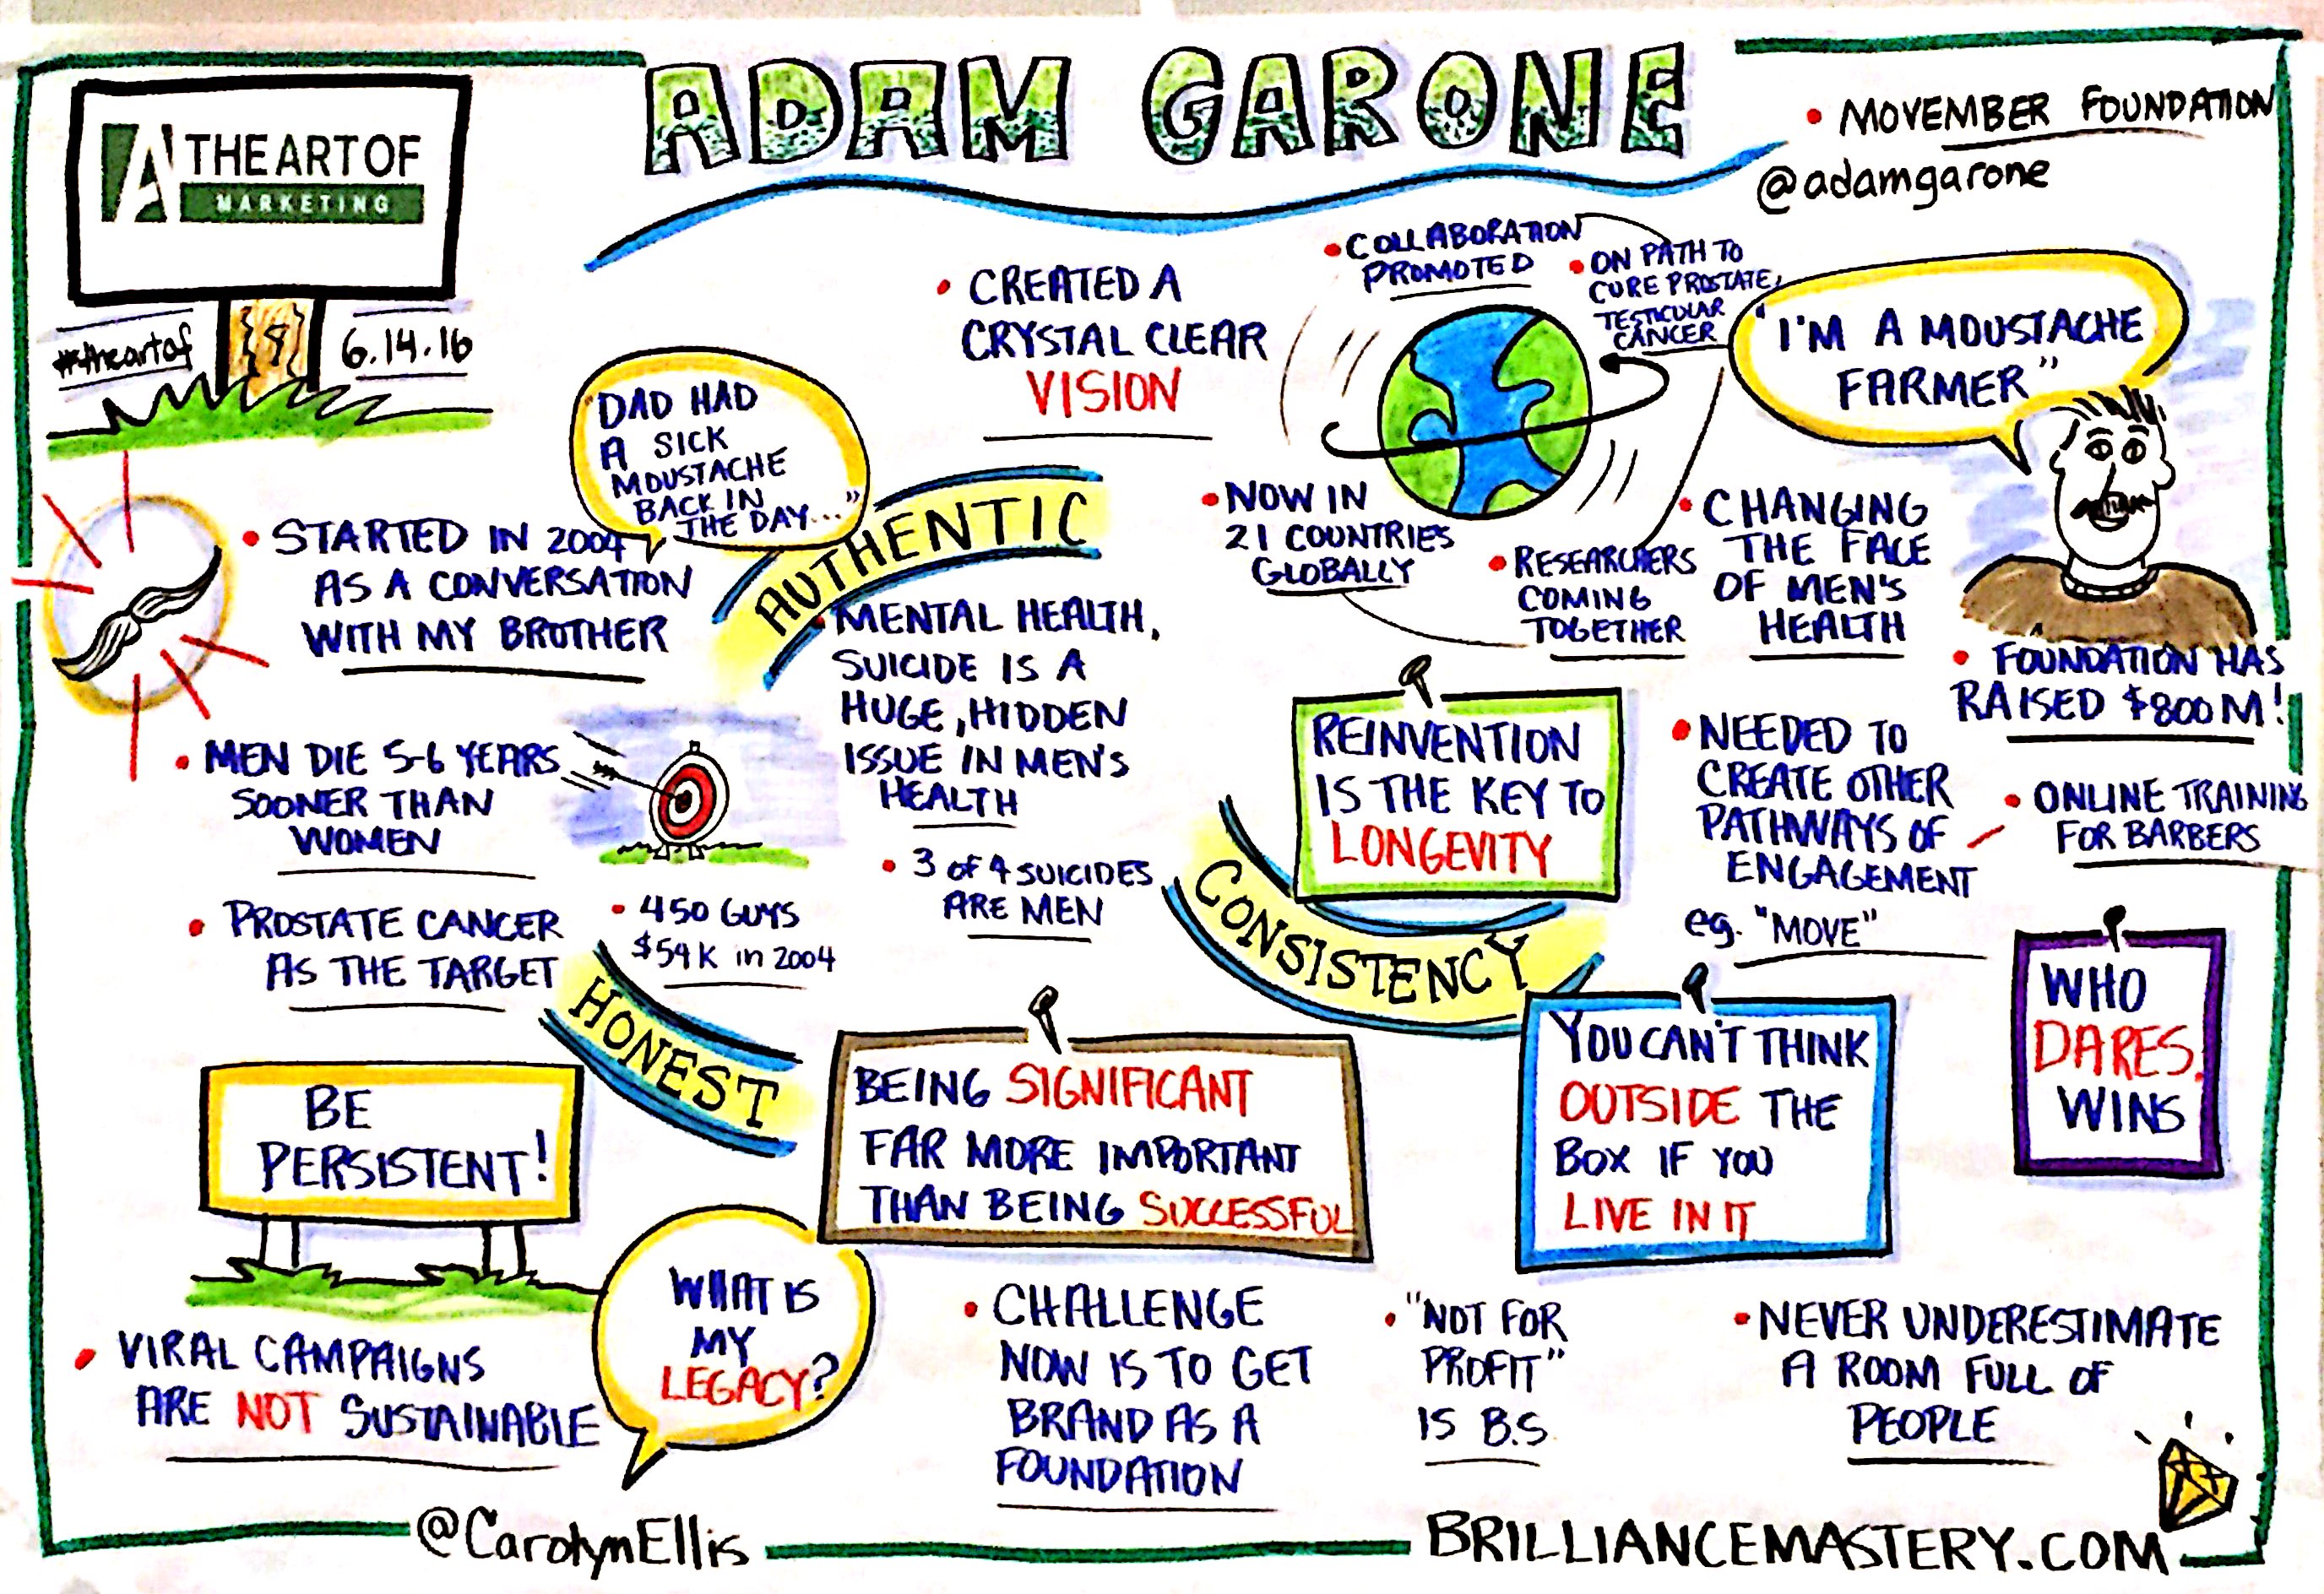 Adam-Garone-graphic-recording-from-the-art-of-marketing